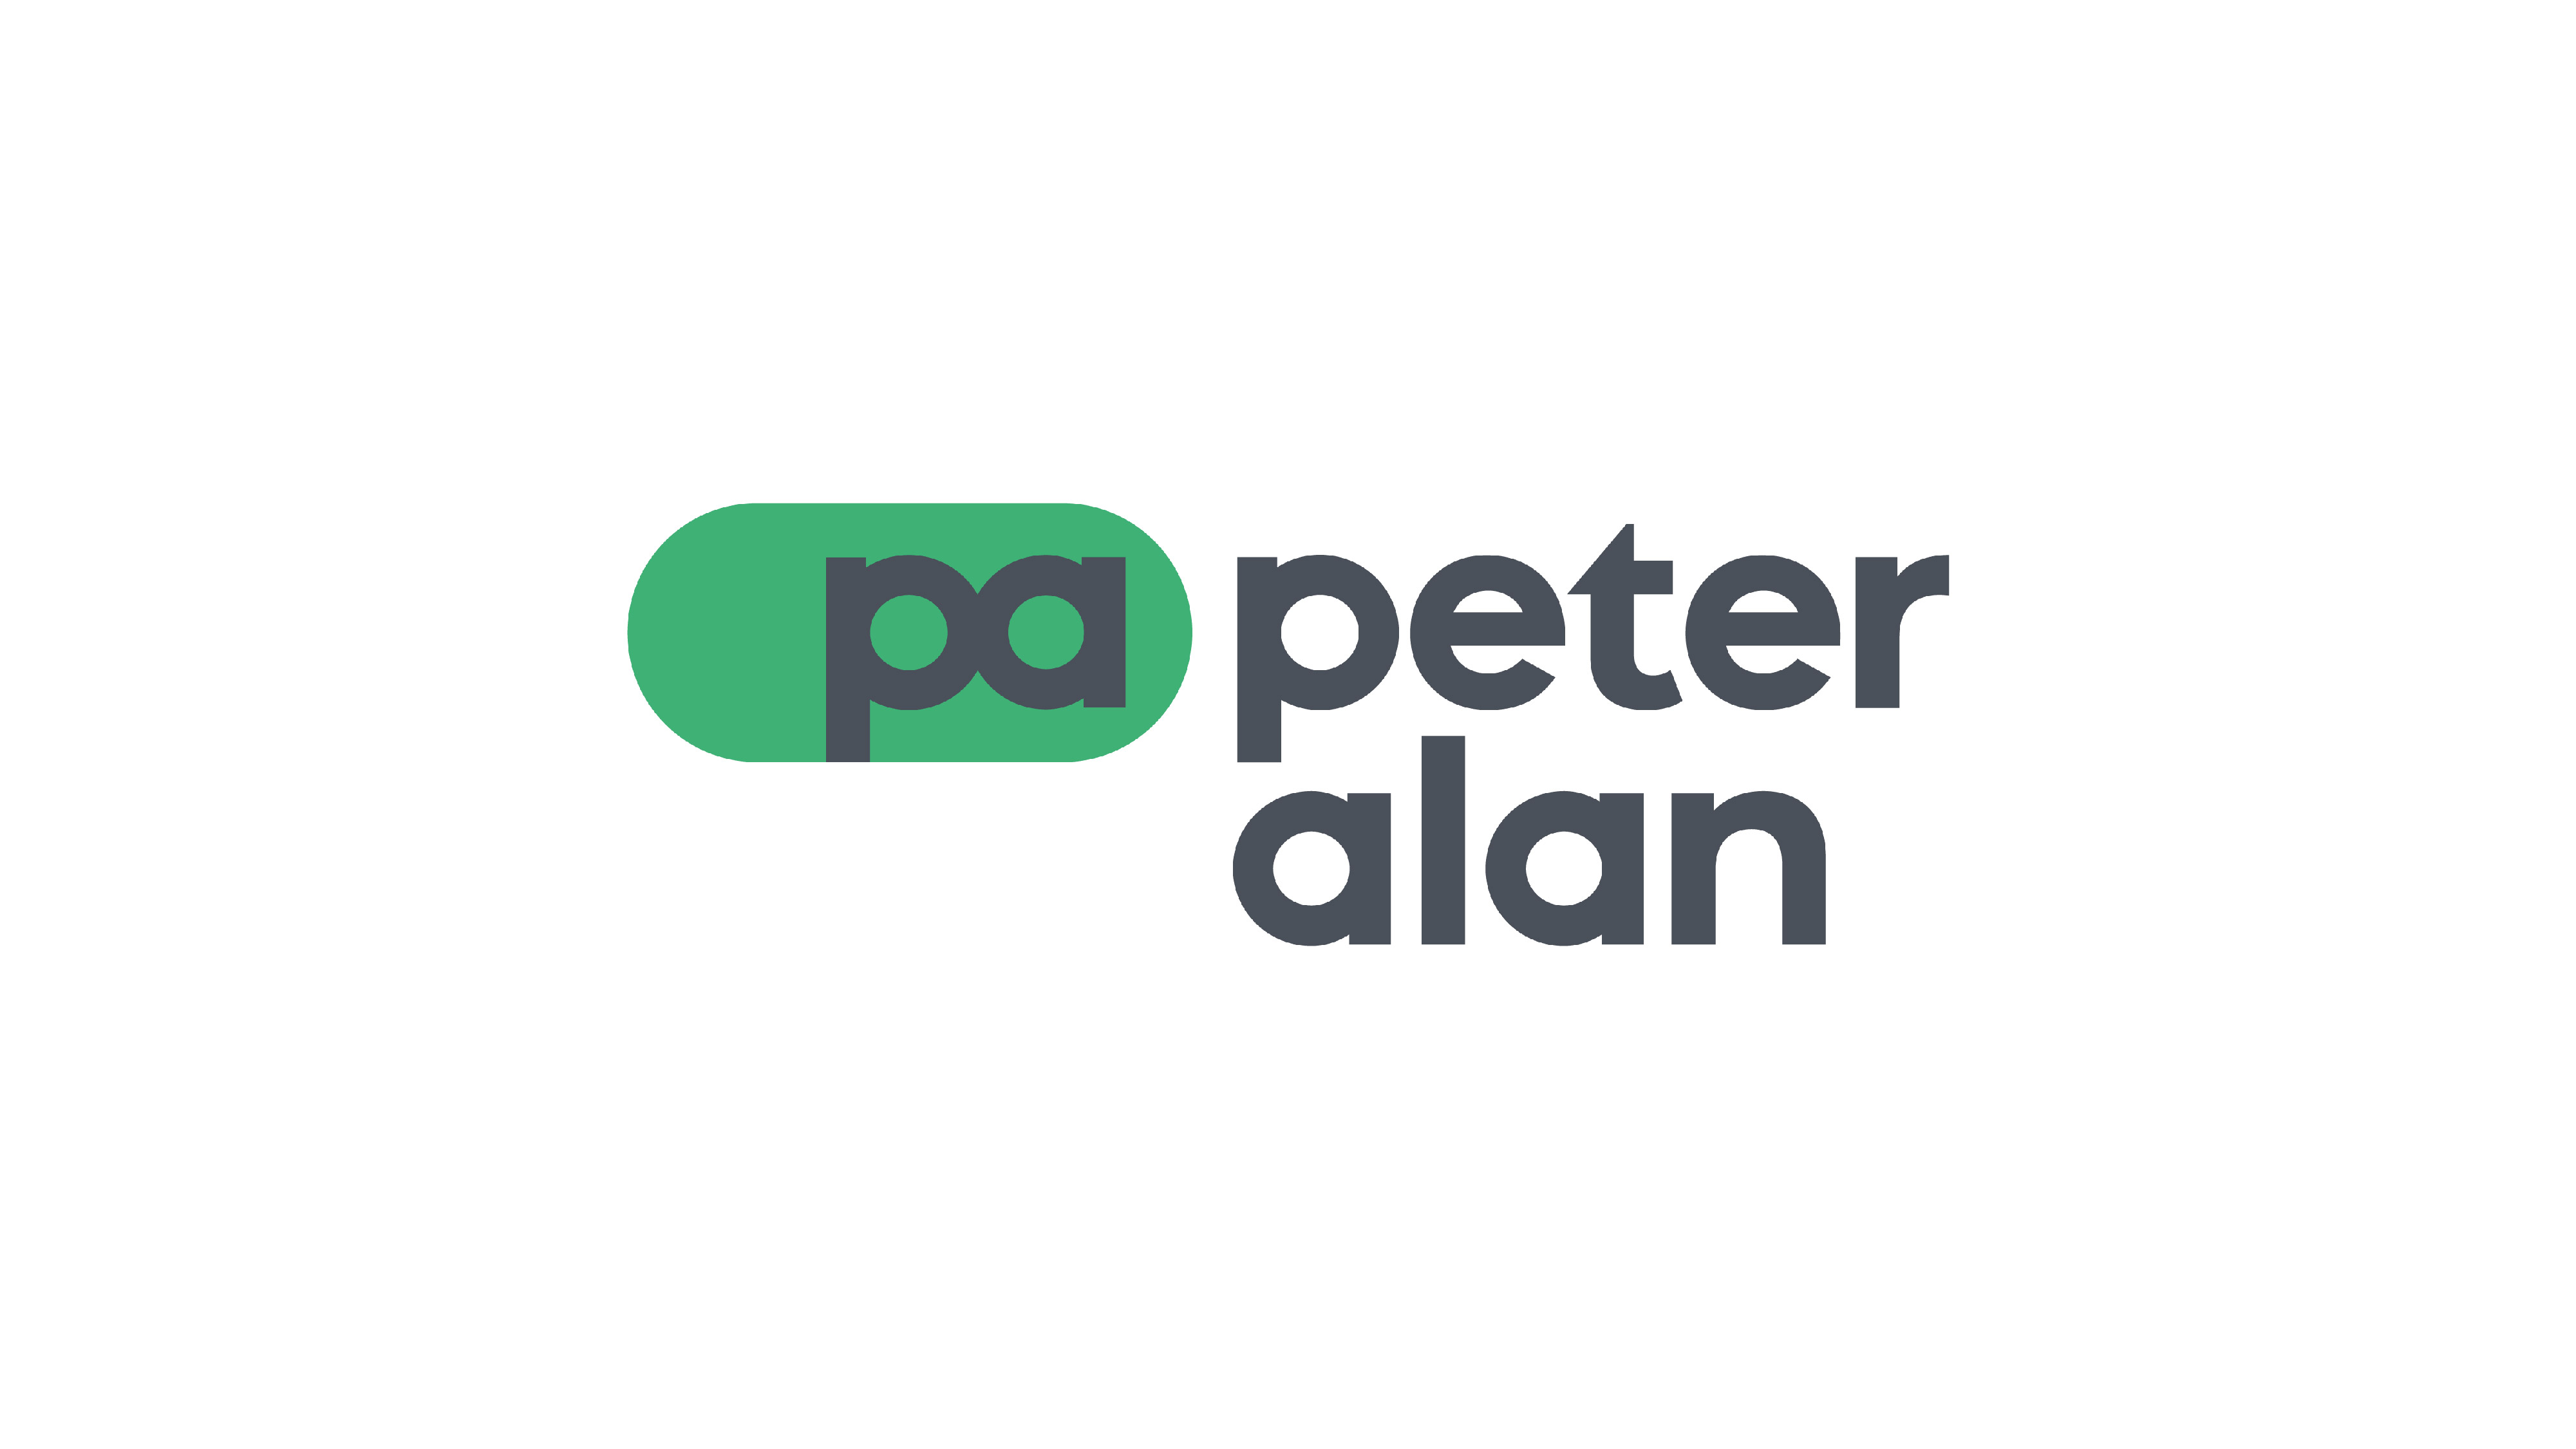 Peter Alan logo